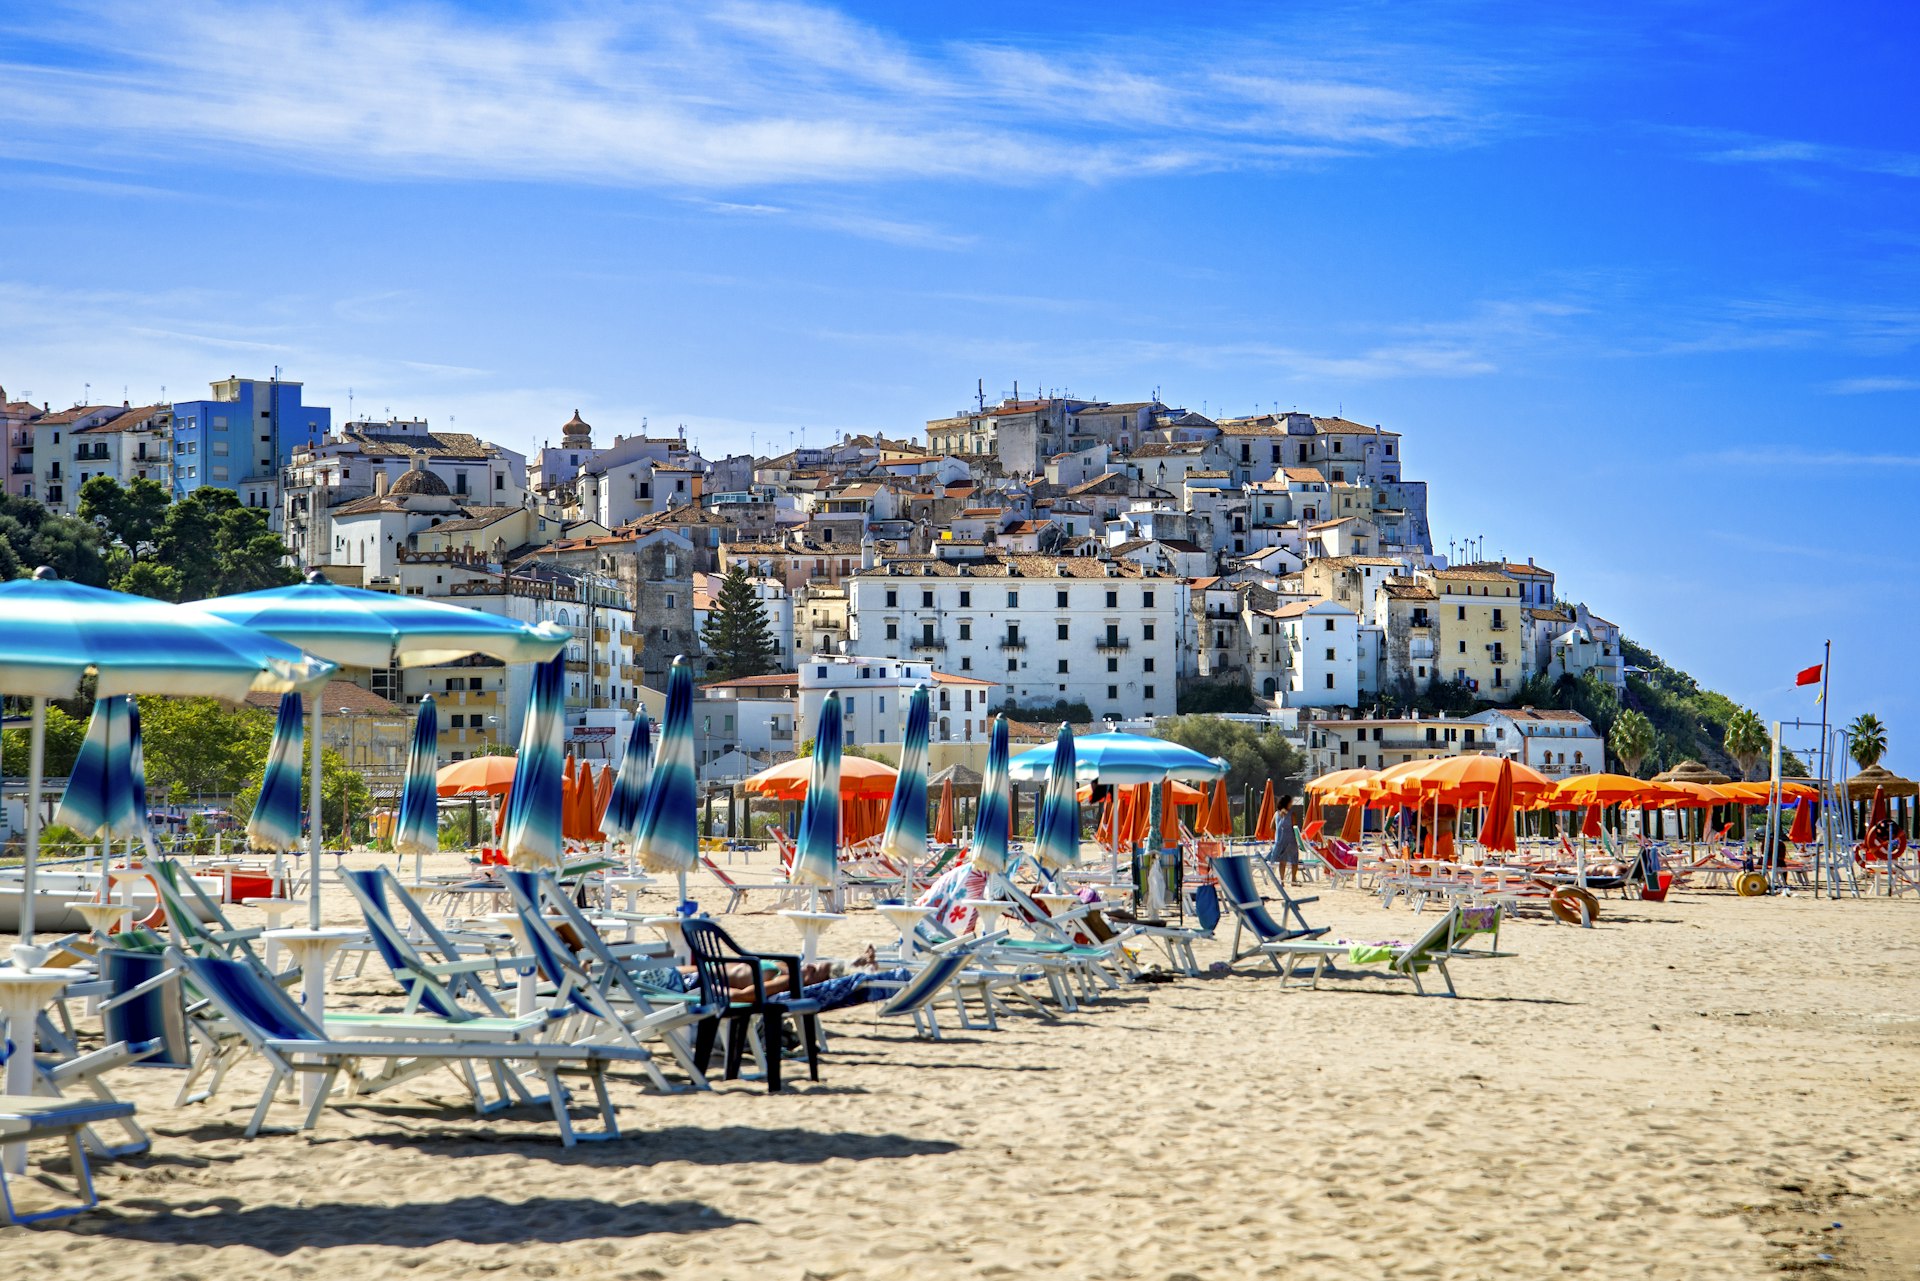 Umbrellas and lounge chairs on the beach of Rodi Garganico in summer